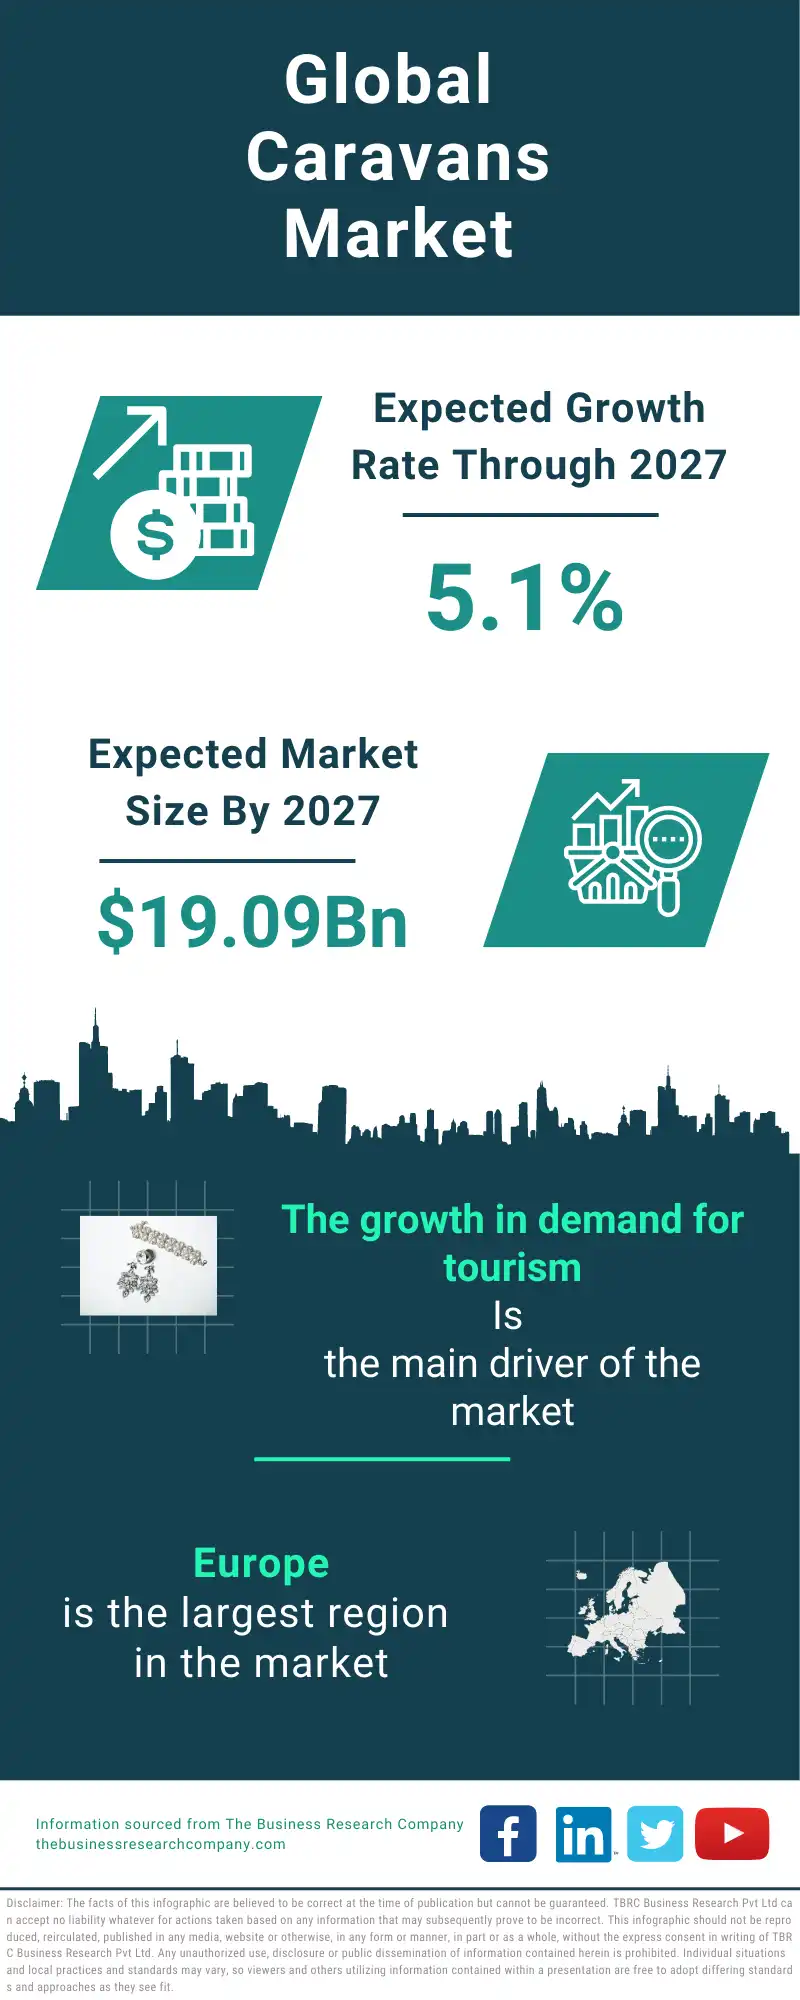 Caravans Global Market Report 2023